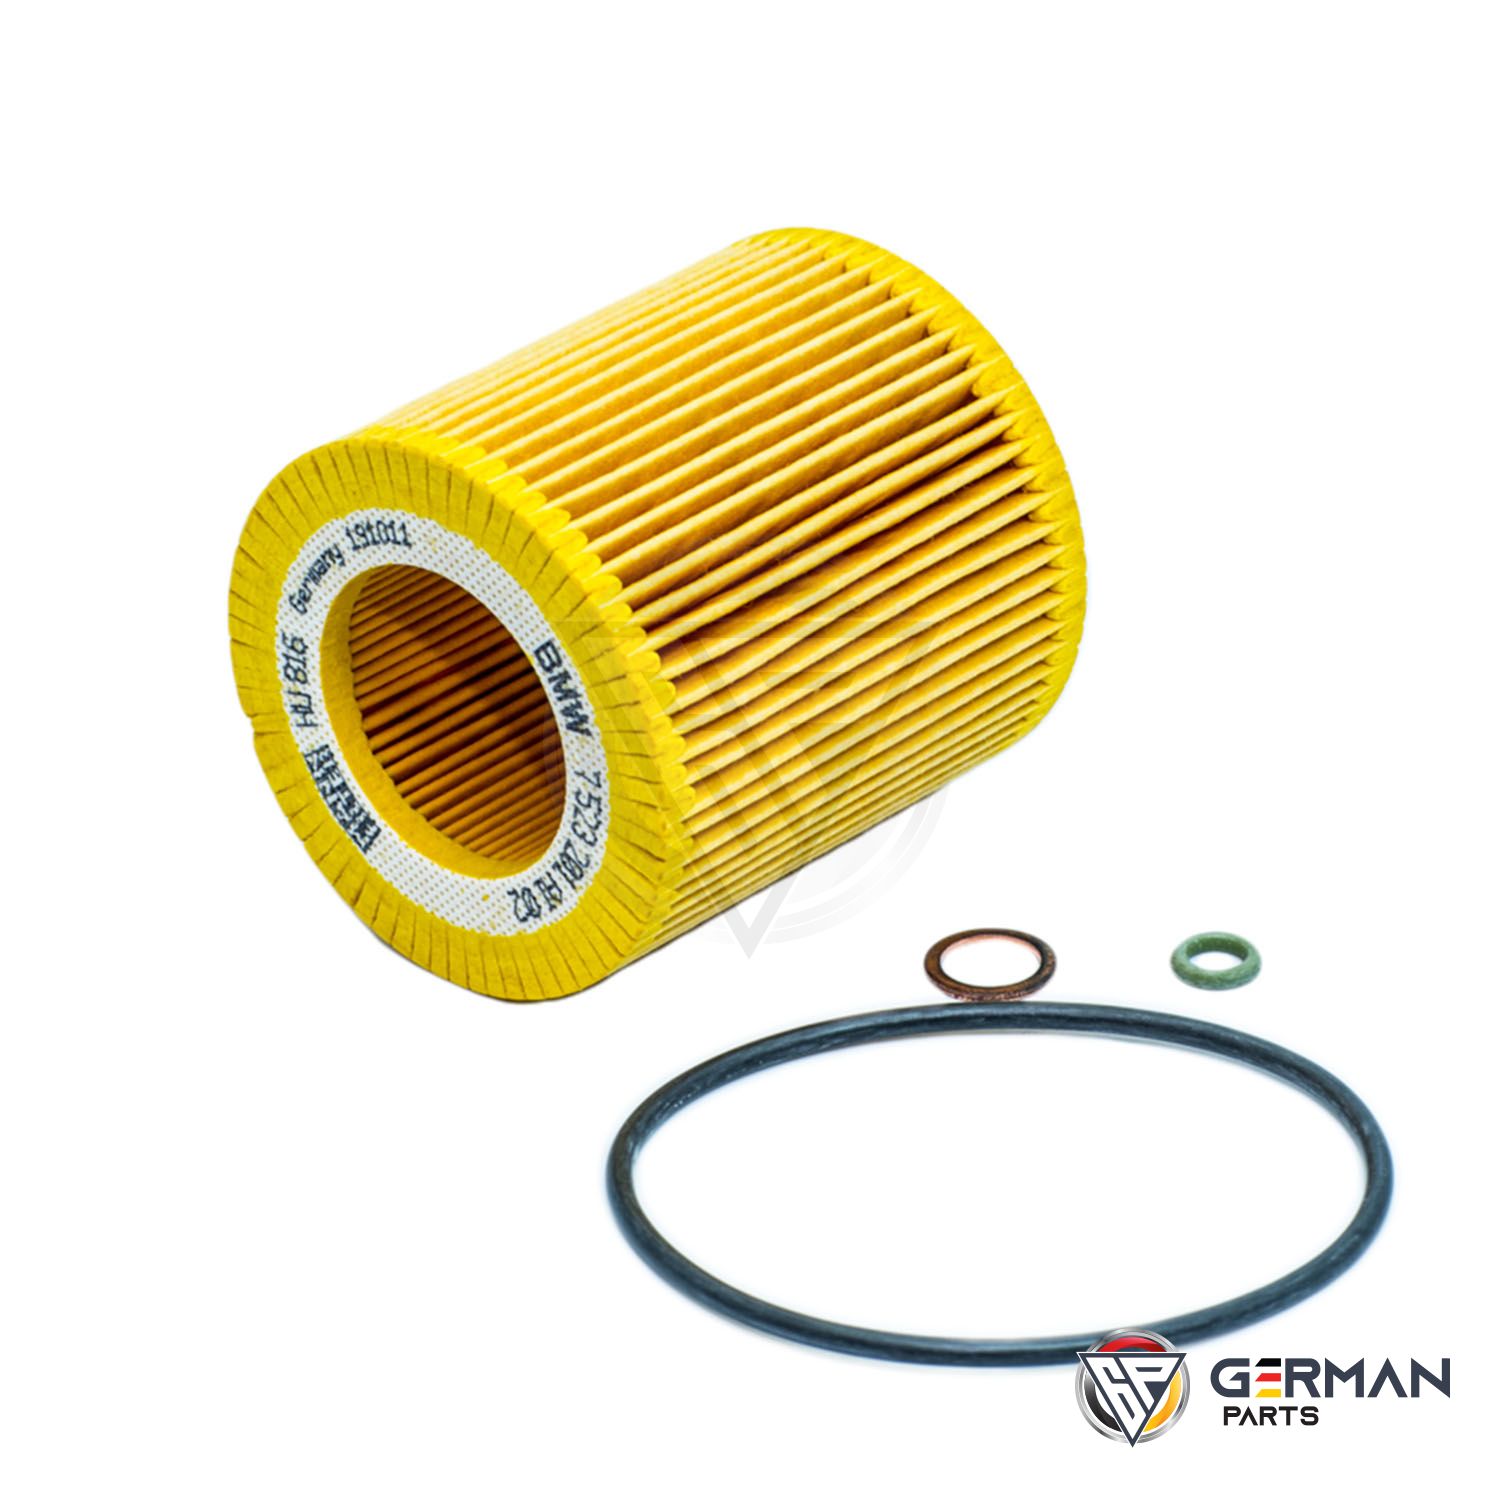 Buy BMW Oil Filter 11427953129 - German Parts